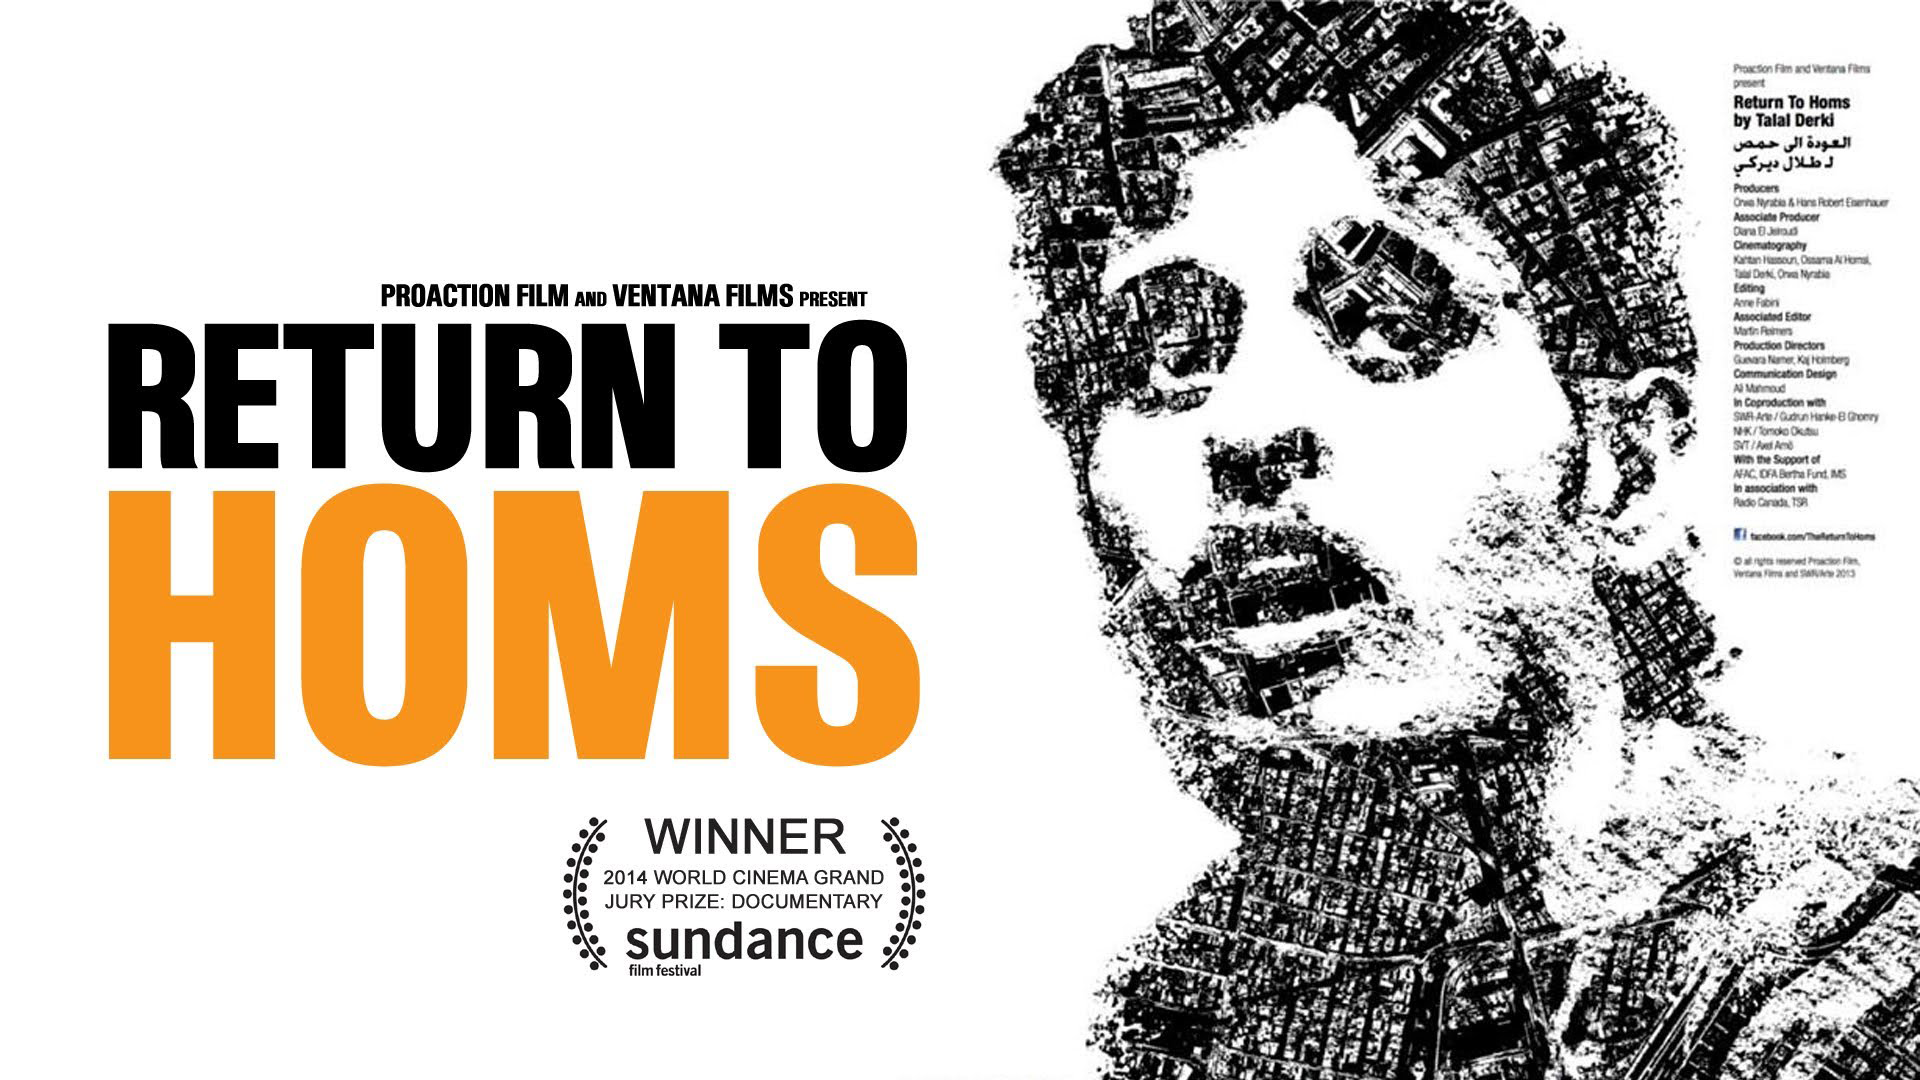 "Return to Homs" movie poster. Image courtesy of ProAction Film/Ventana Films.